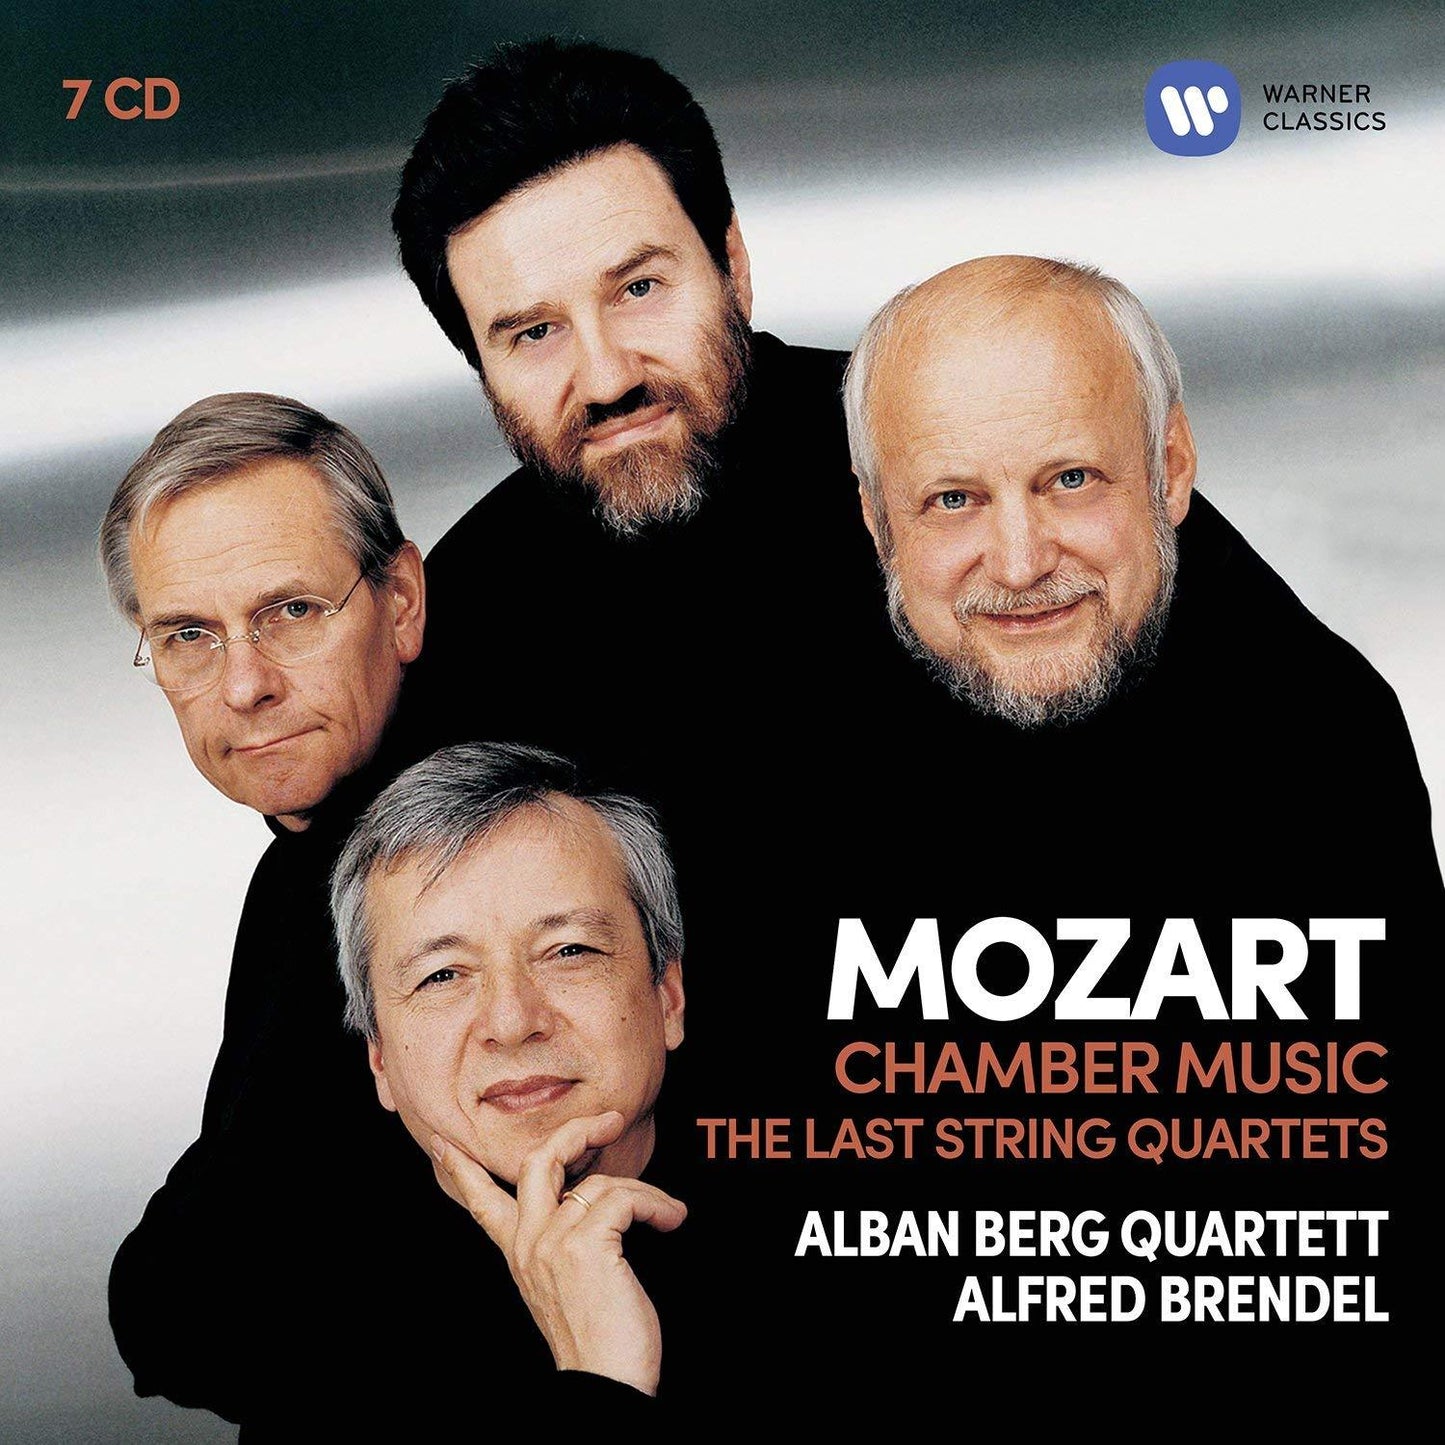 MOZART: CHAMBER MUSIC (THE LAST STRING QUARTETS) - ALBAN BERG QUARTET (7 CDS)